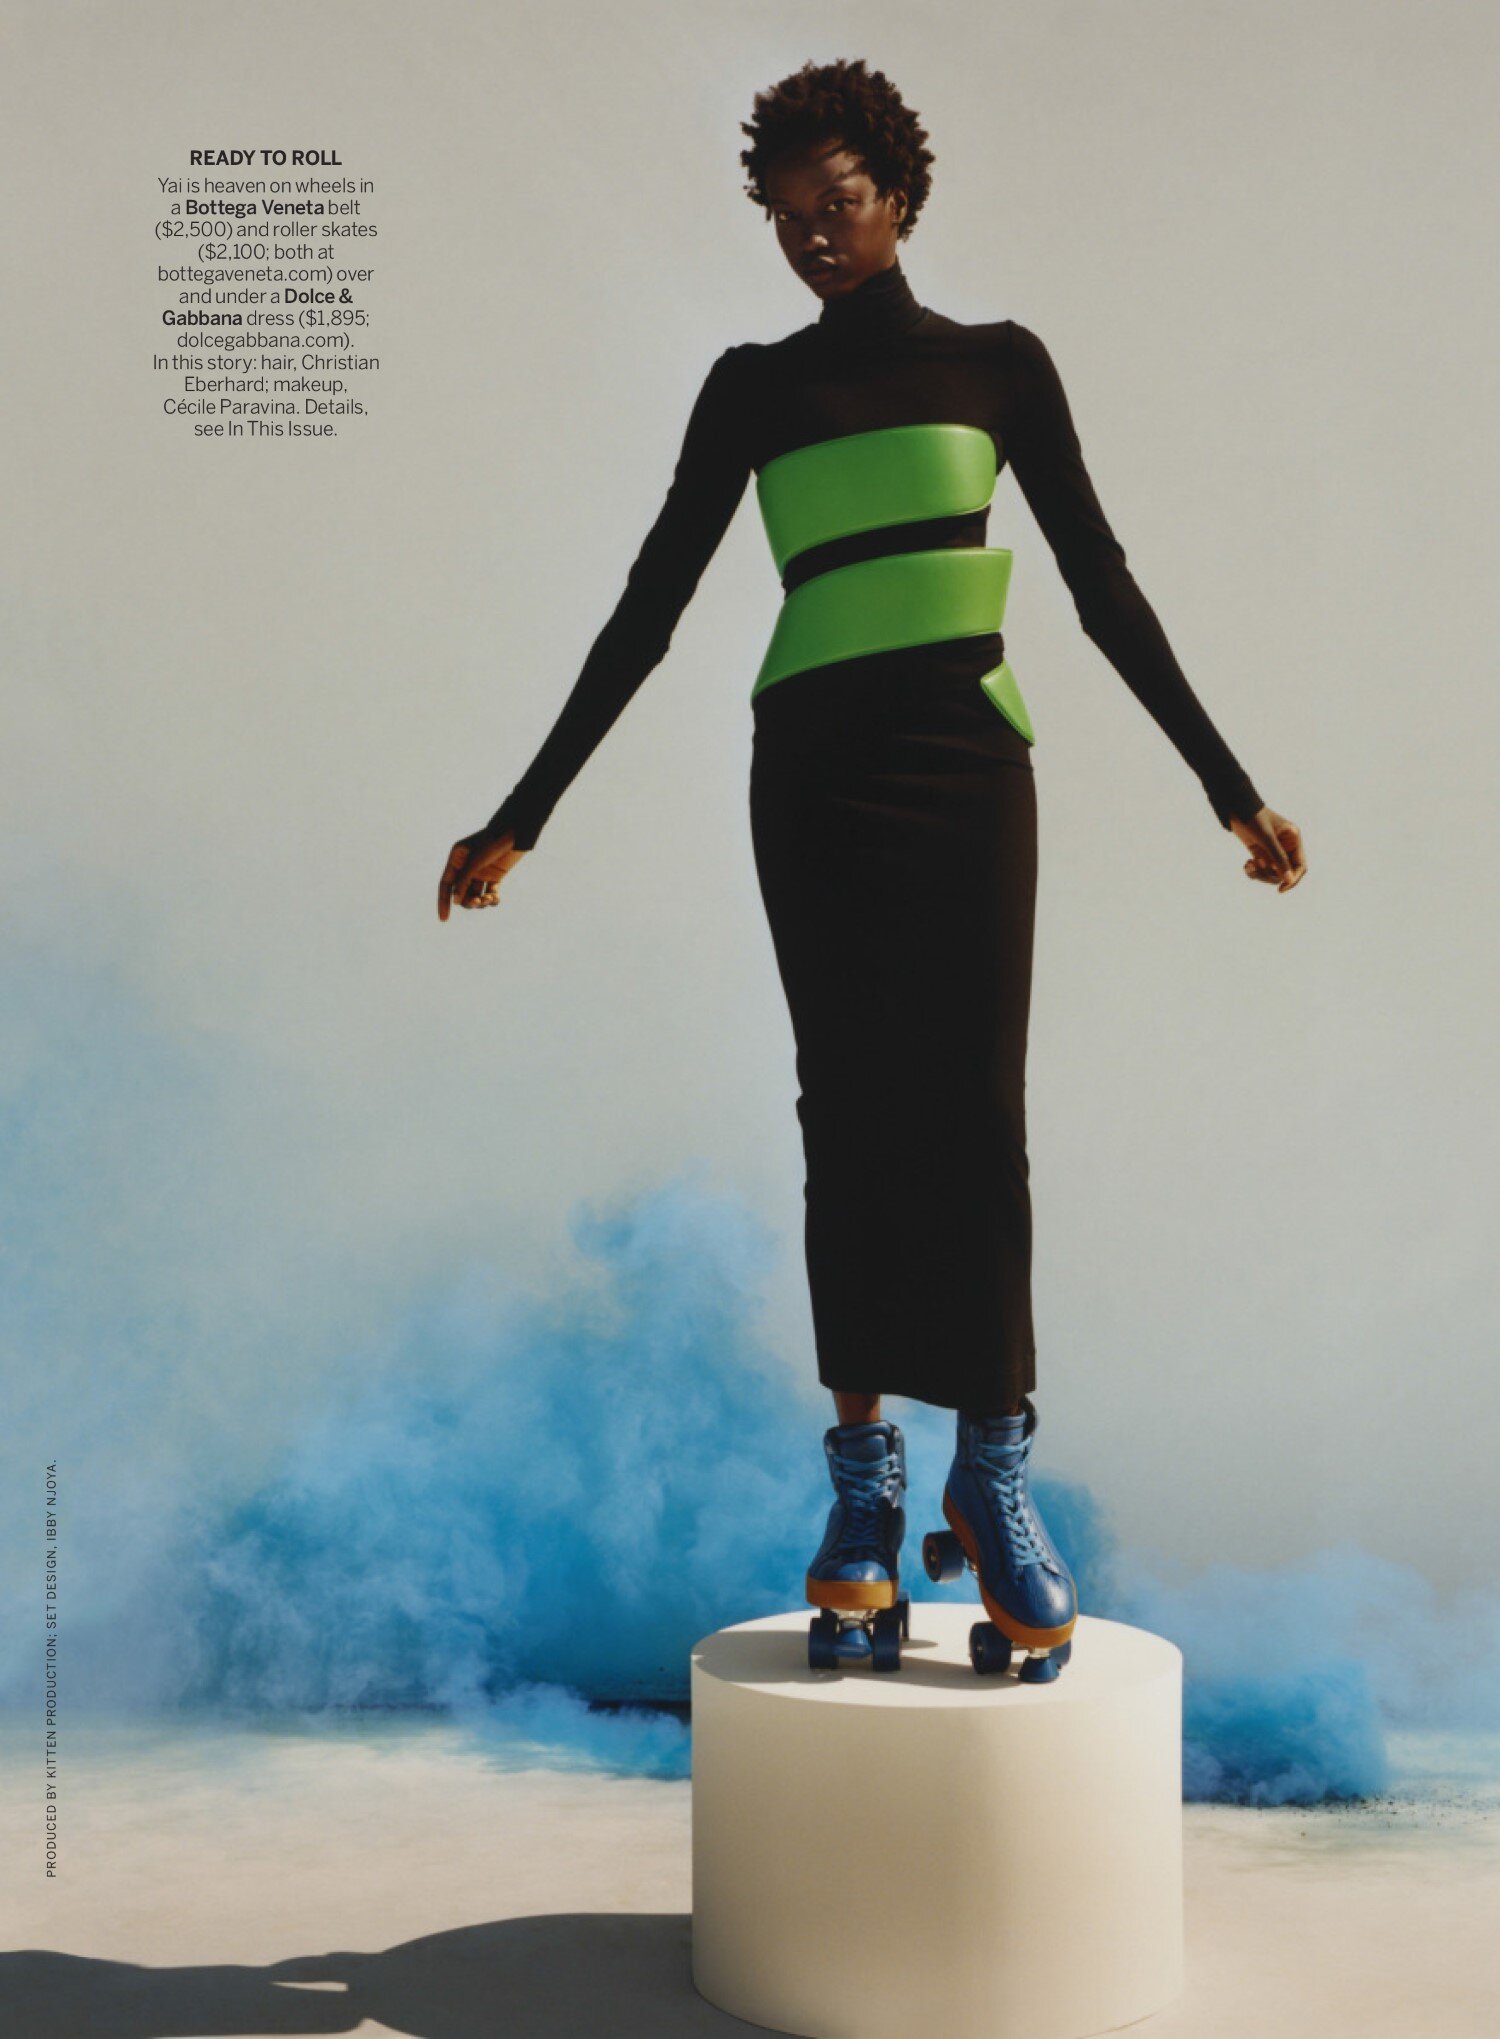 Anok-Yai-by-Theo-de-Gueltzl-for Vogue-US-August-2021 (5).jpg